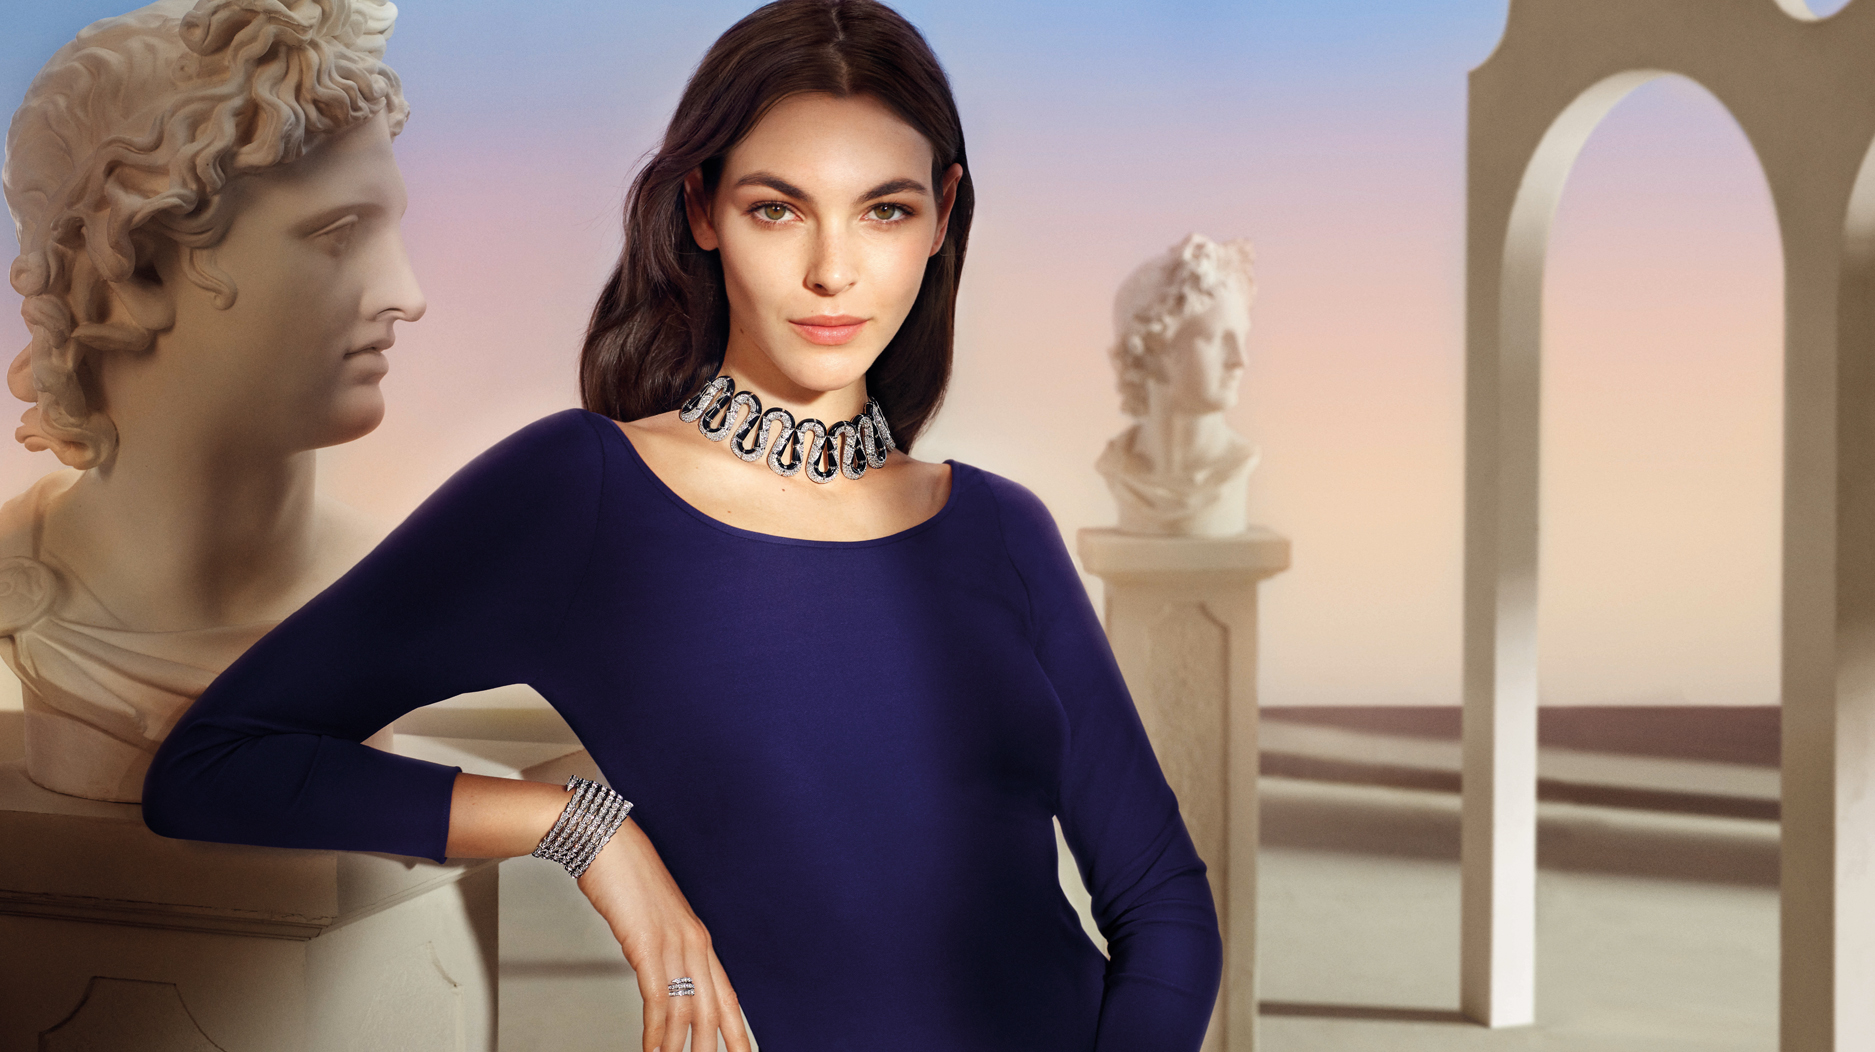 Bulgari’s New Ads Star Zendaya and a KPop Phenom National Jeweler